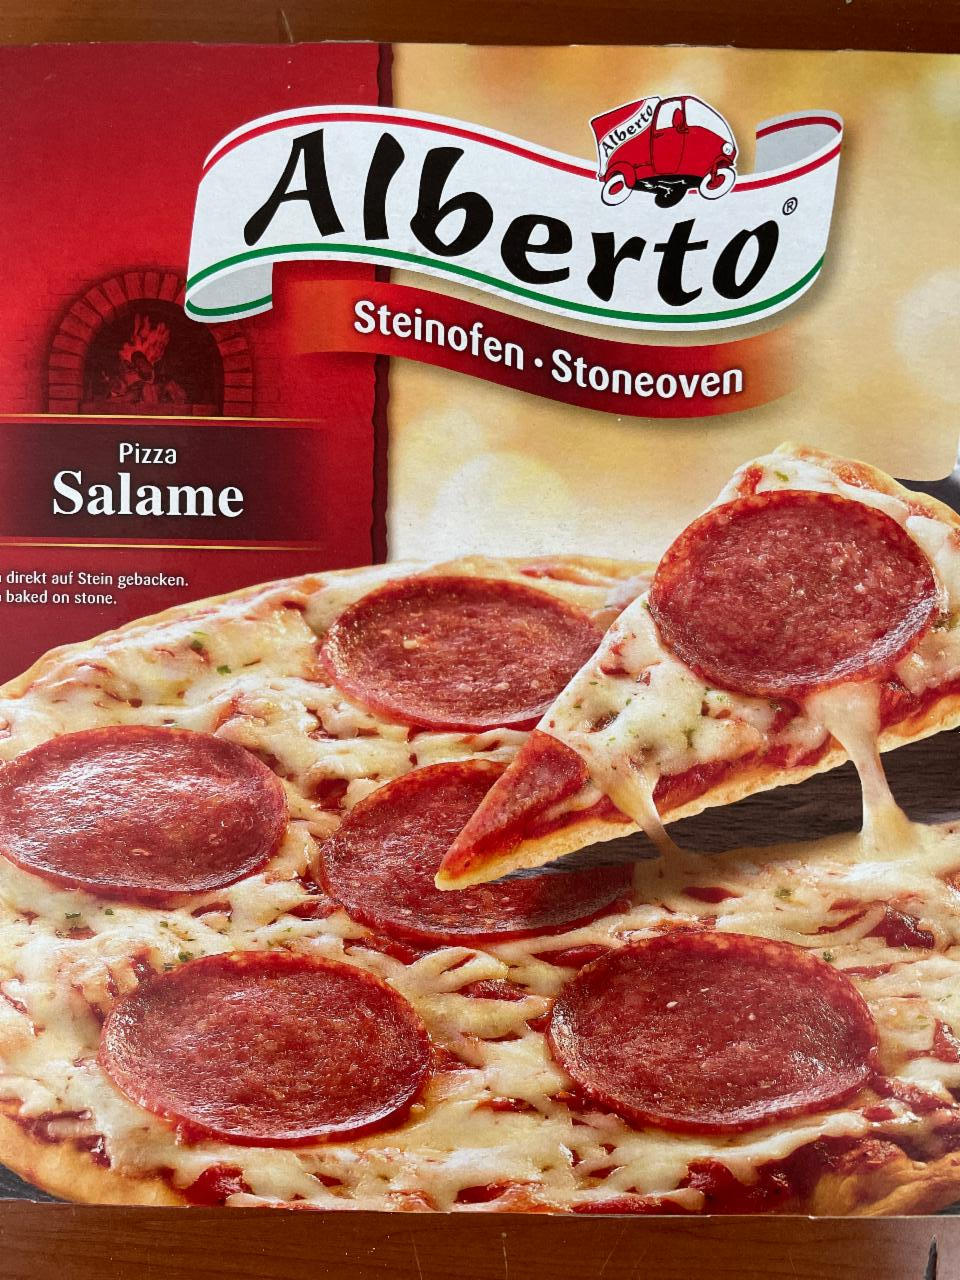 Фото - пицца замороженная Salame Alberto